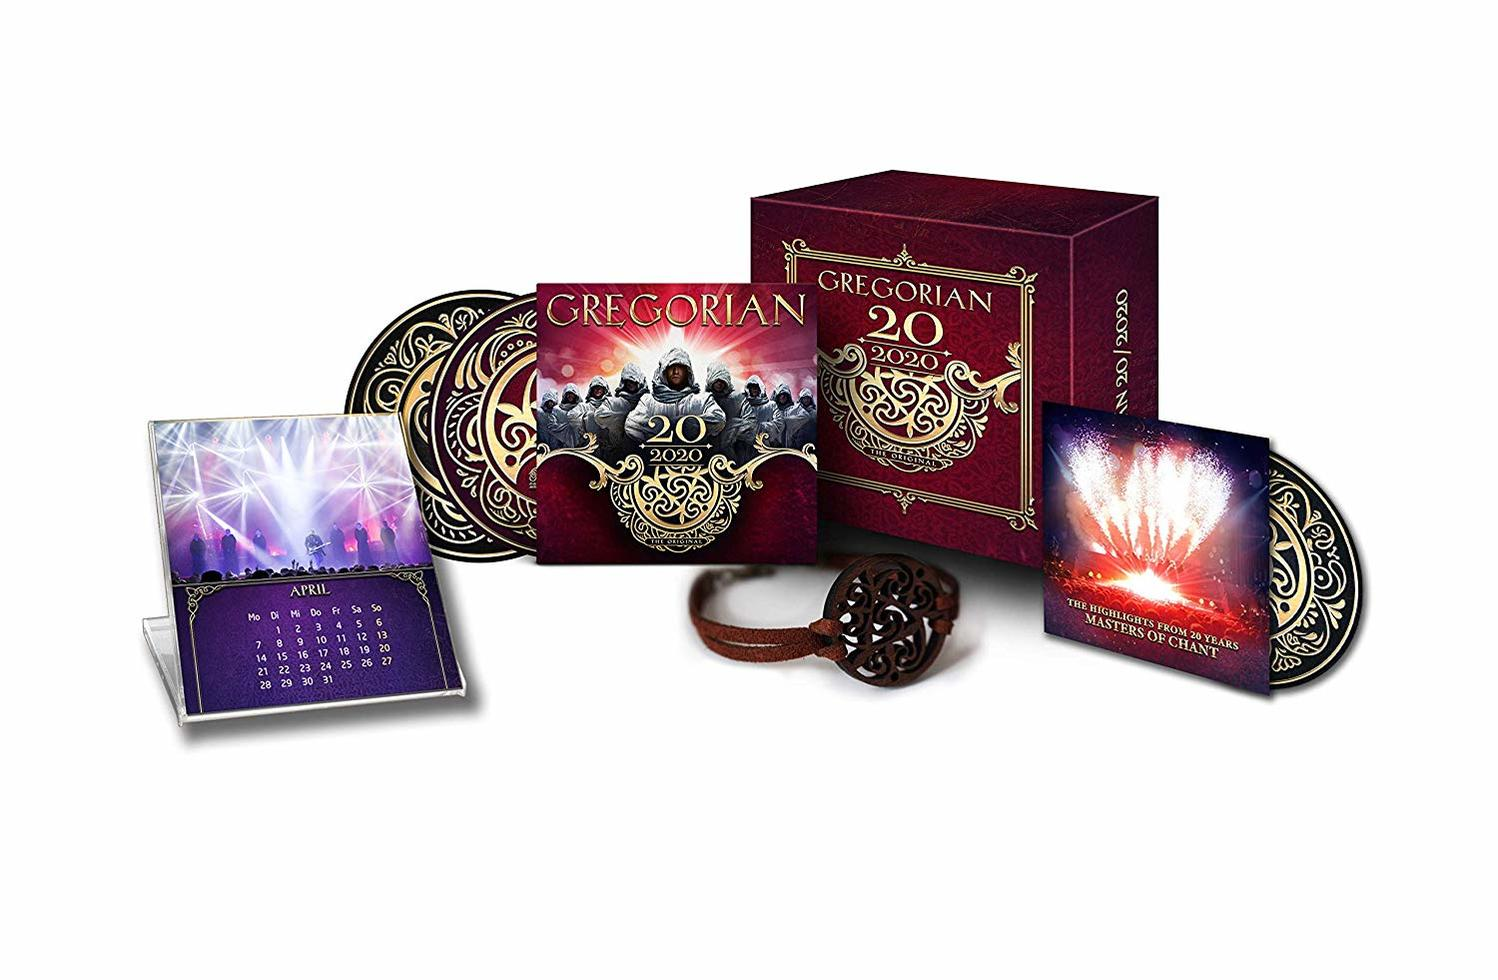 Gregorian - (Limited Video) (CD DVD + Set) - 20/2020 Box